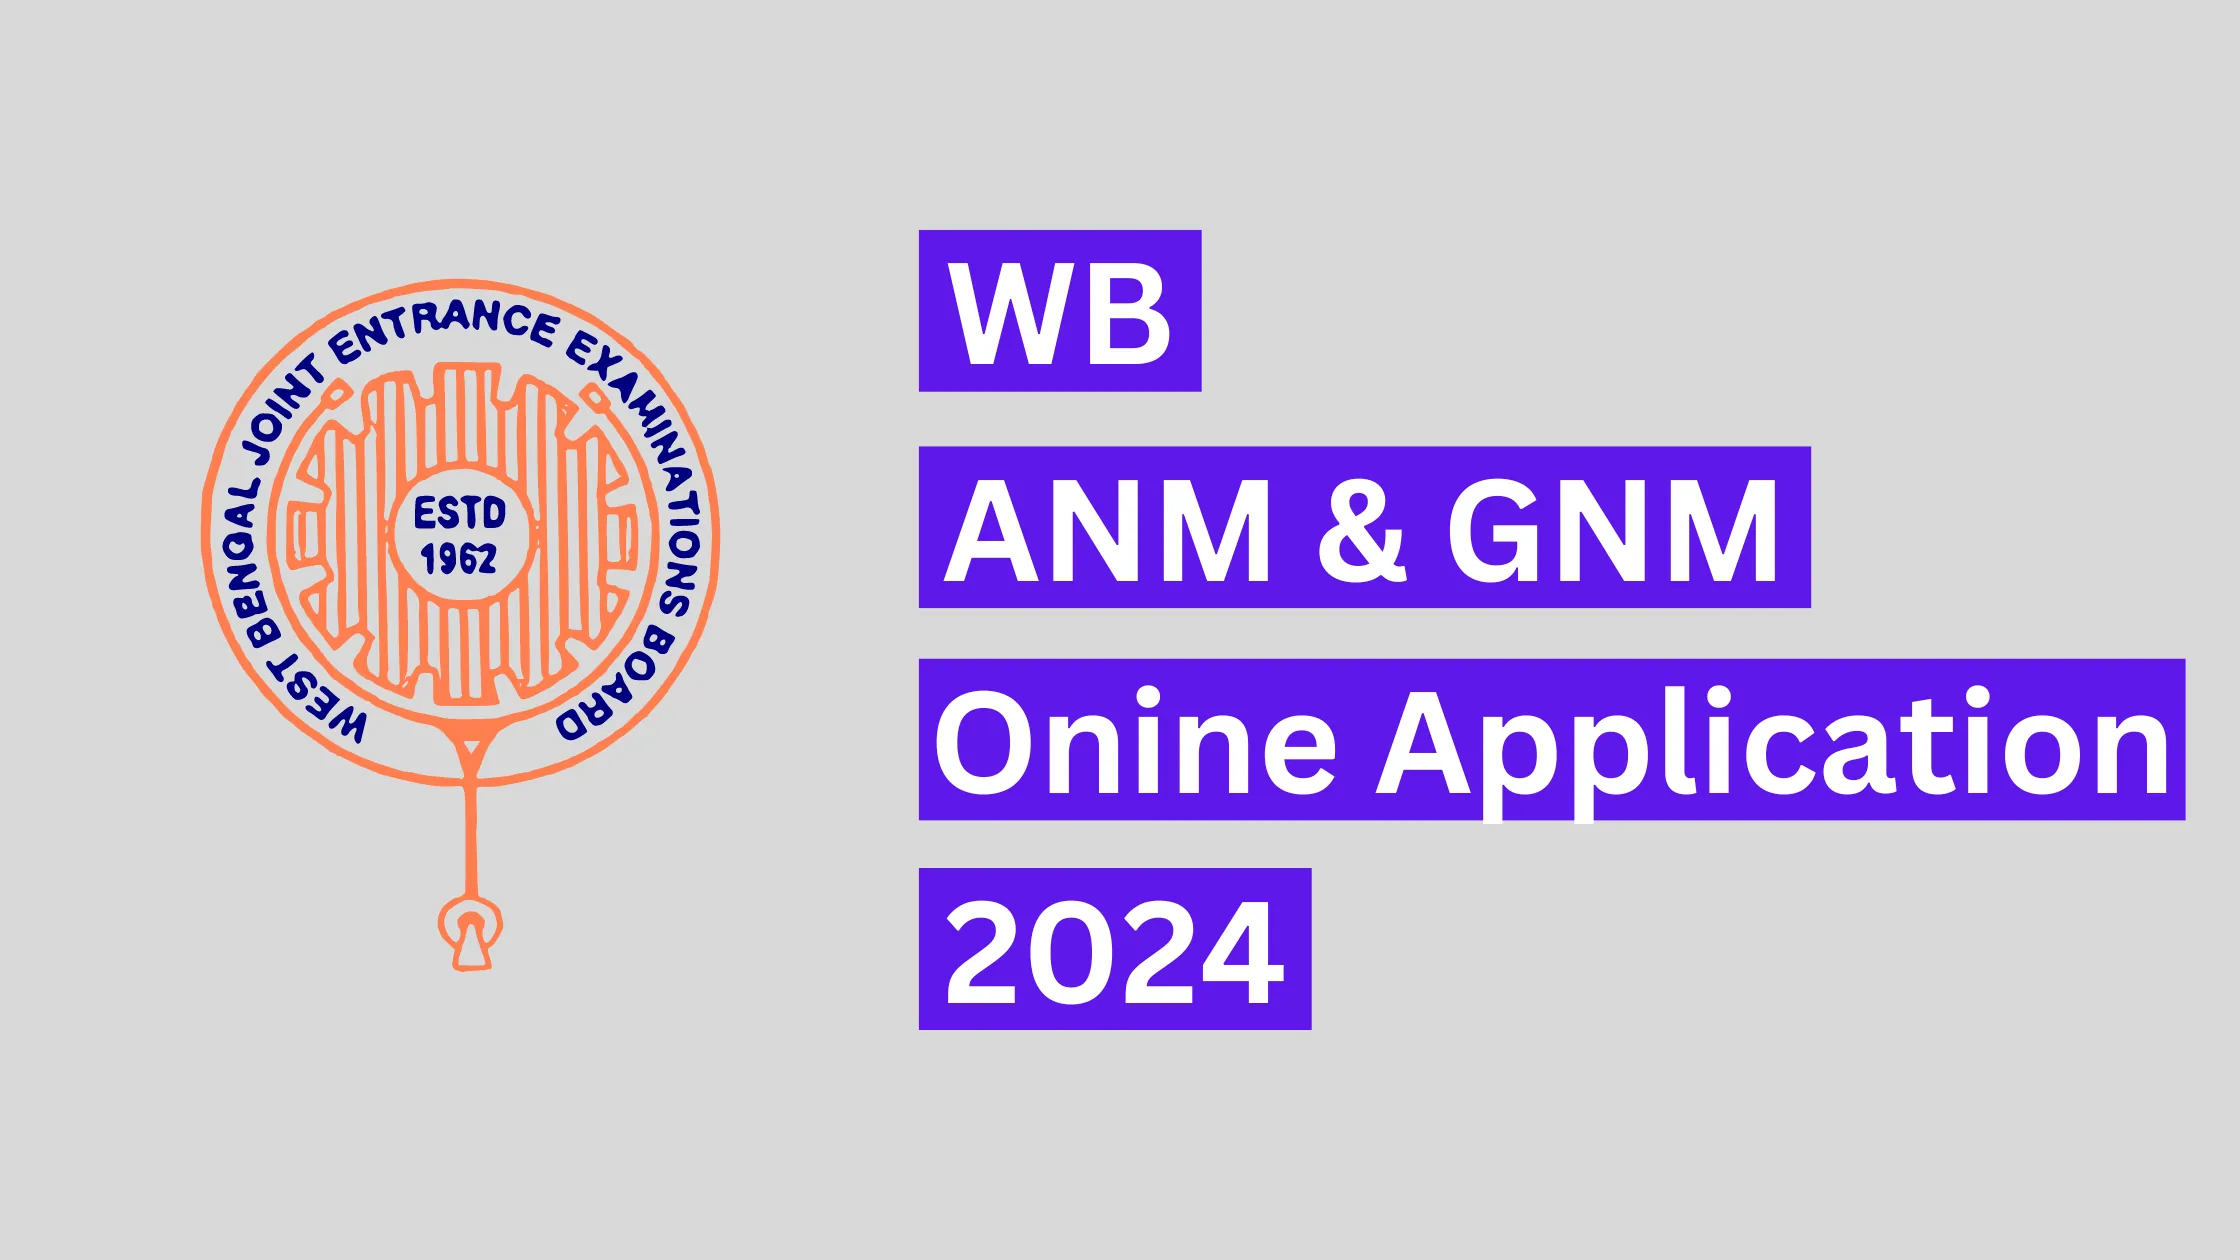 WB ANM & GNM 2024 Online Application